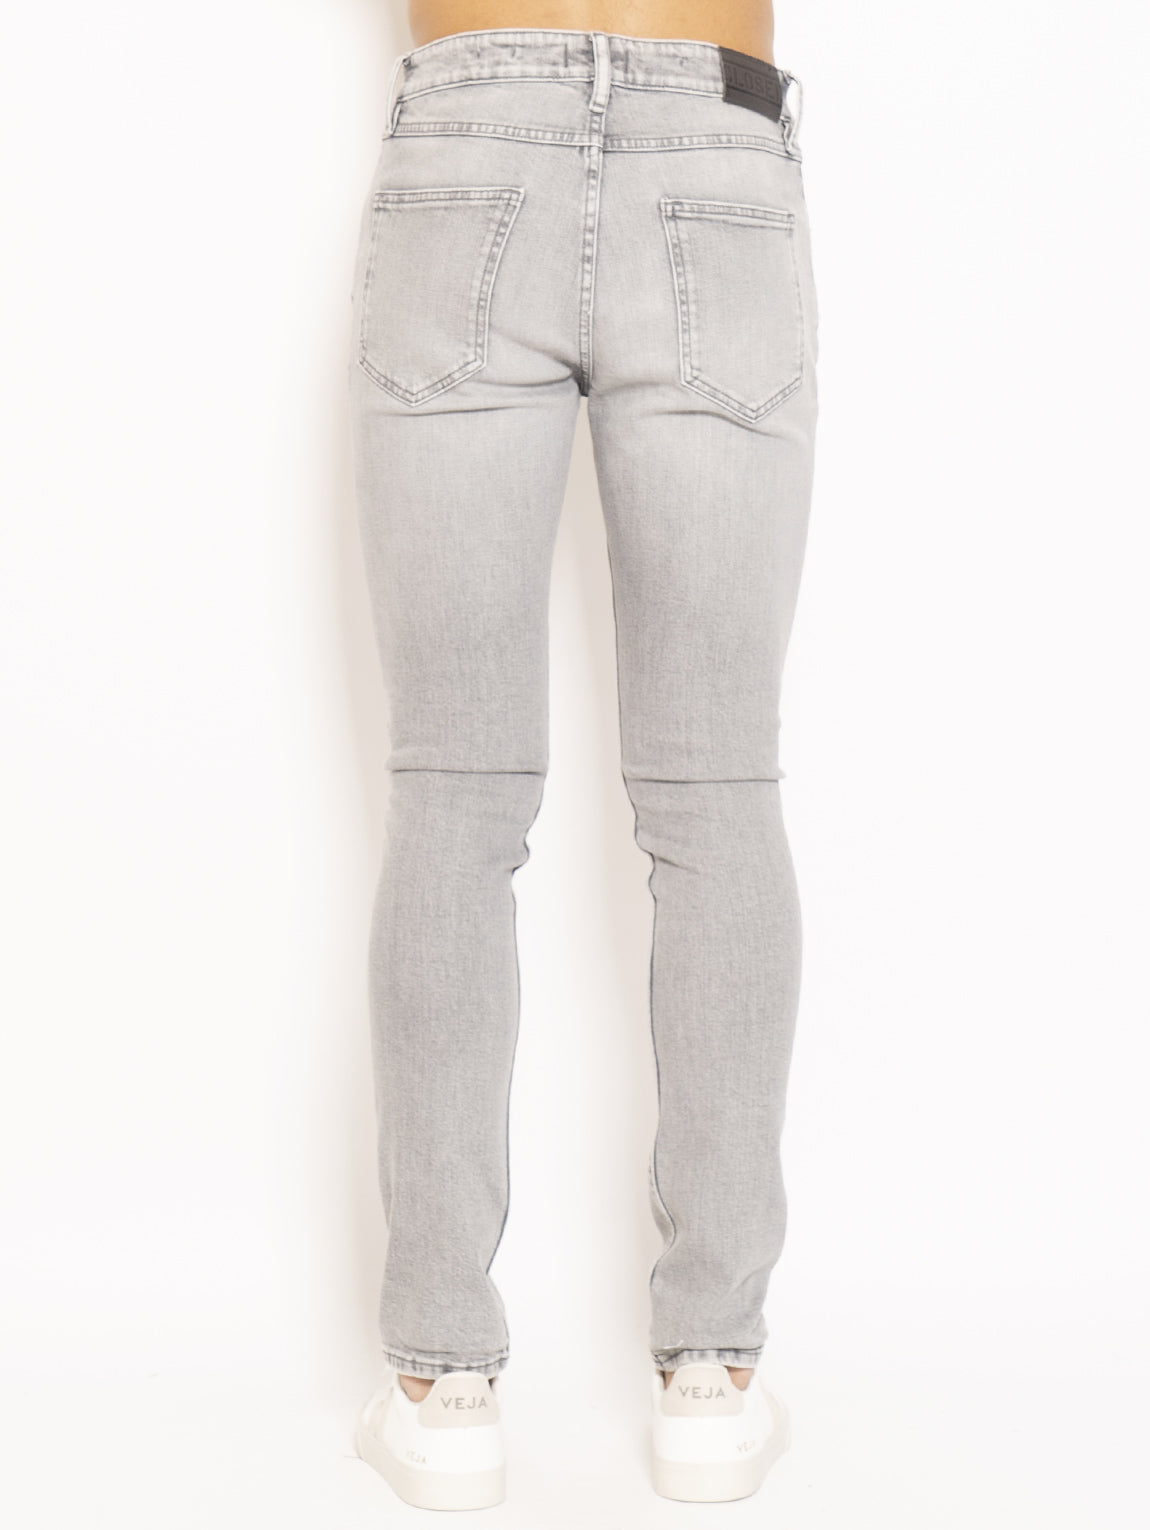 Pit Skinny Gray Jeans